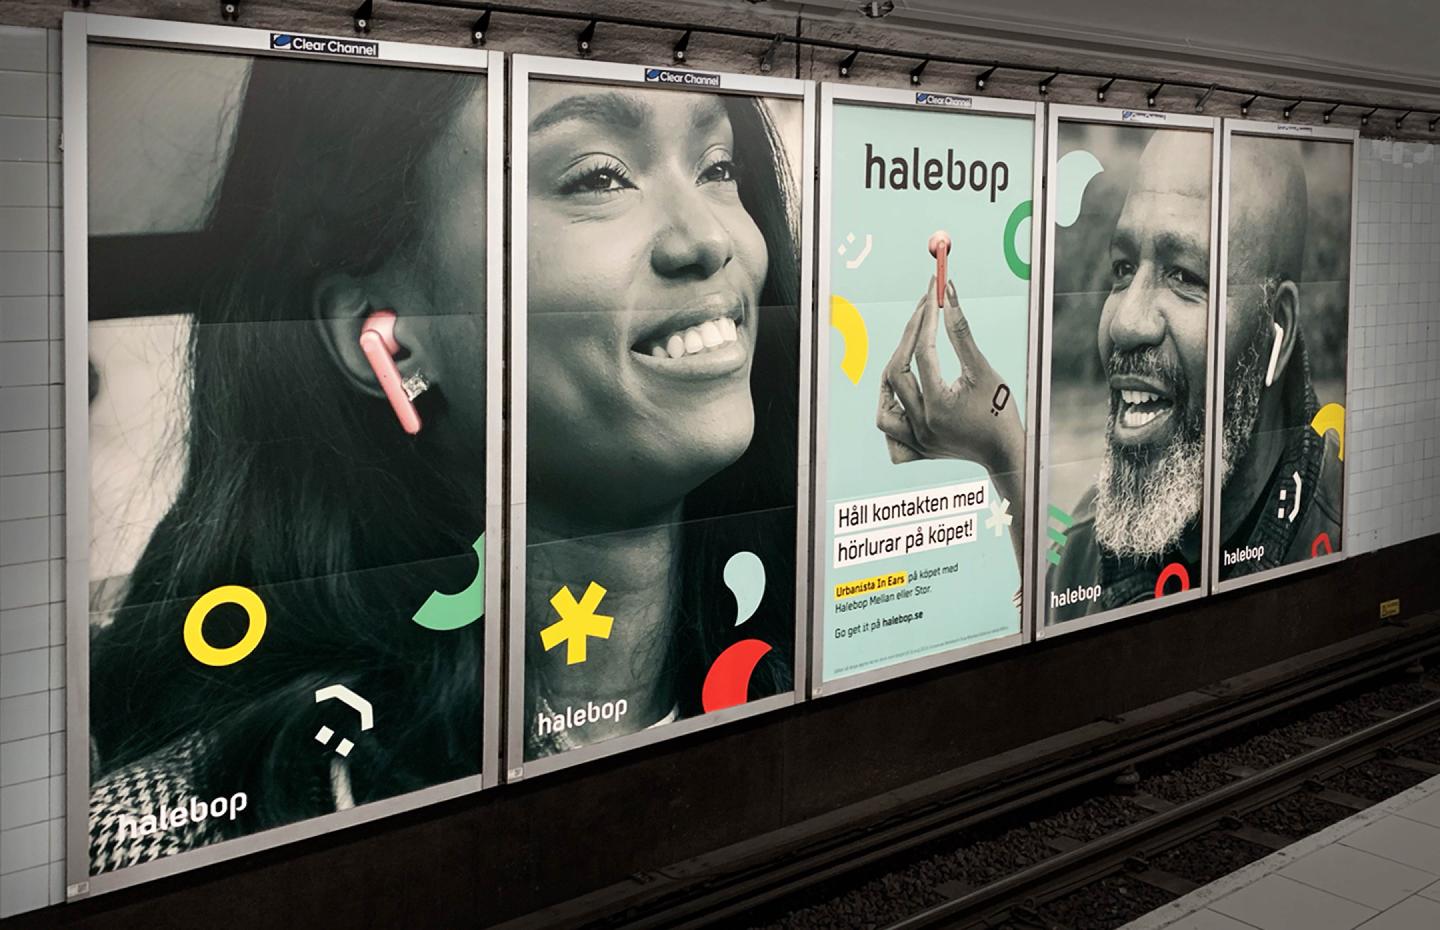 Halebop signs in subway